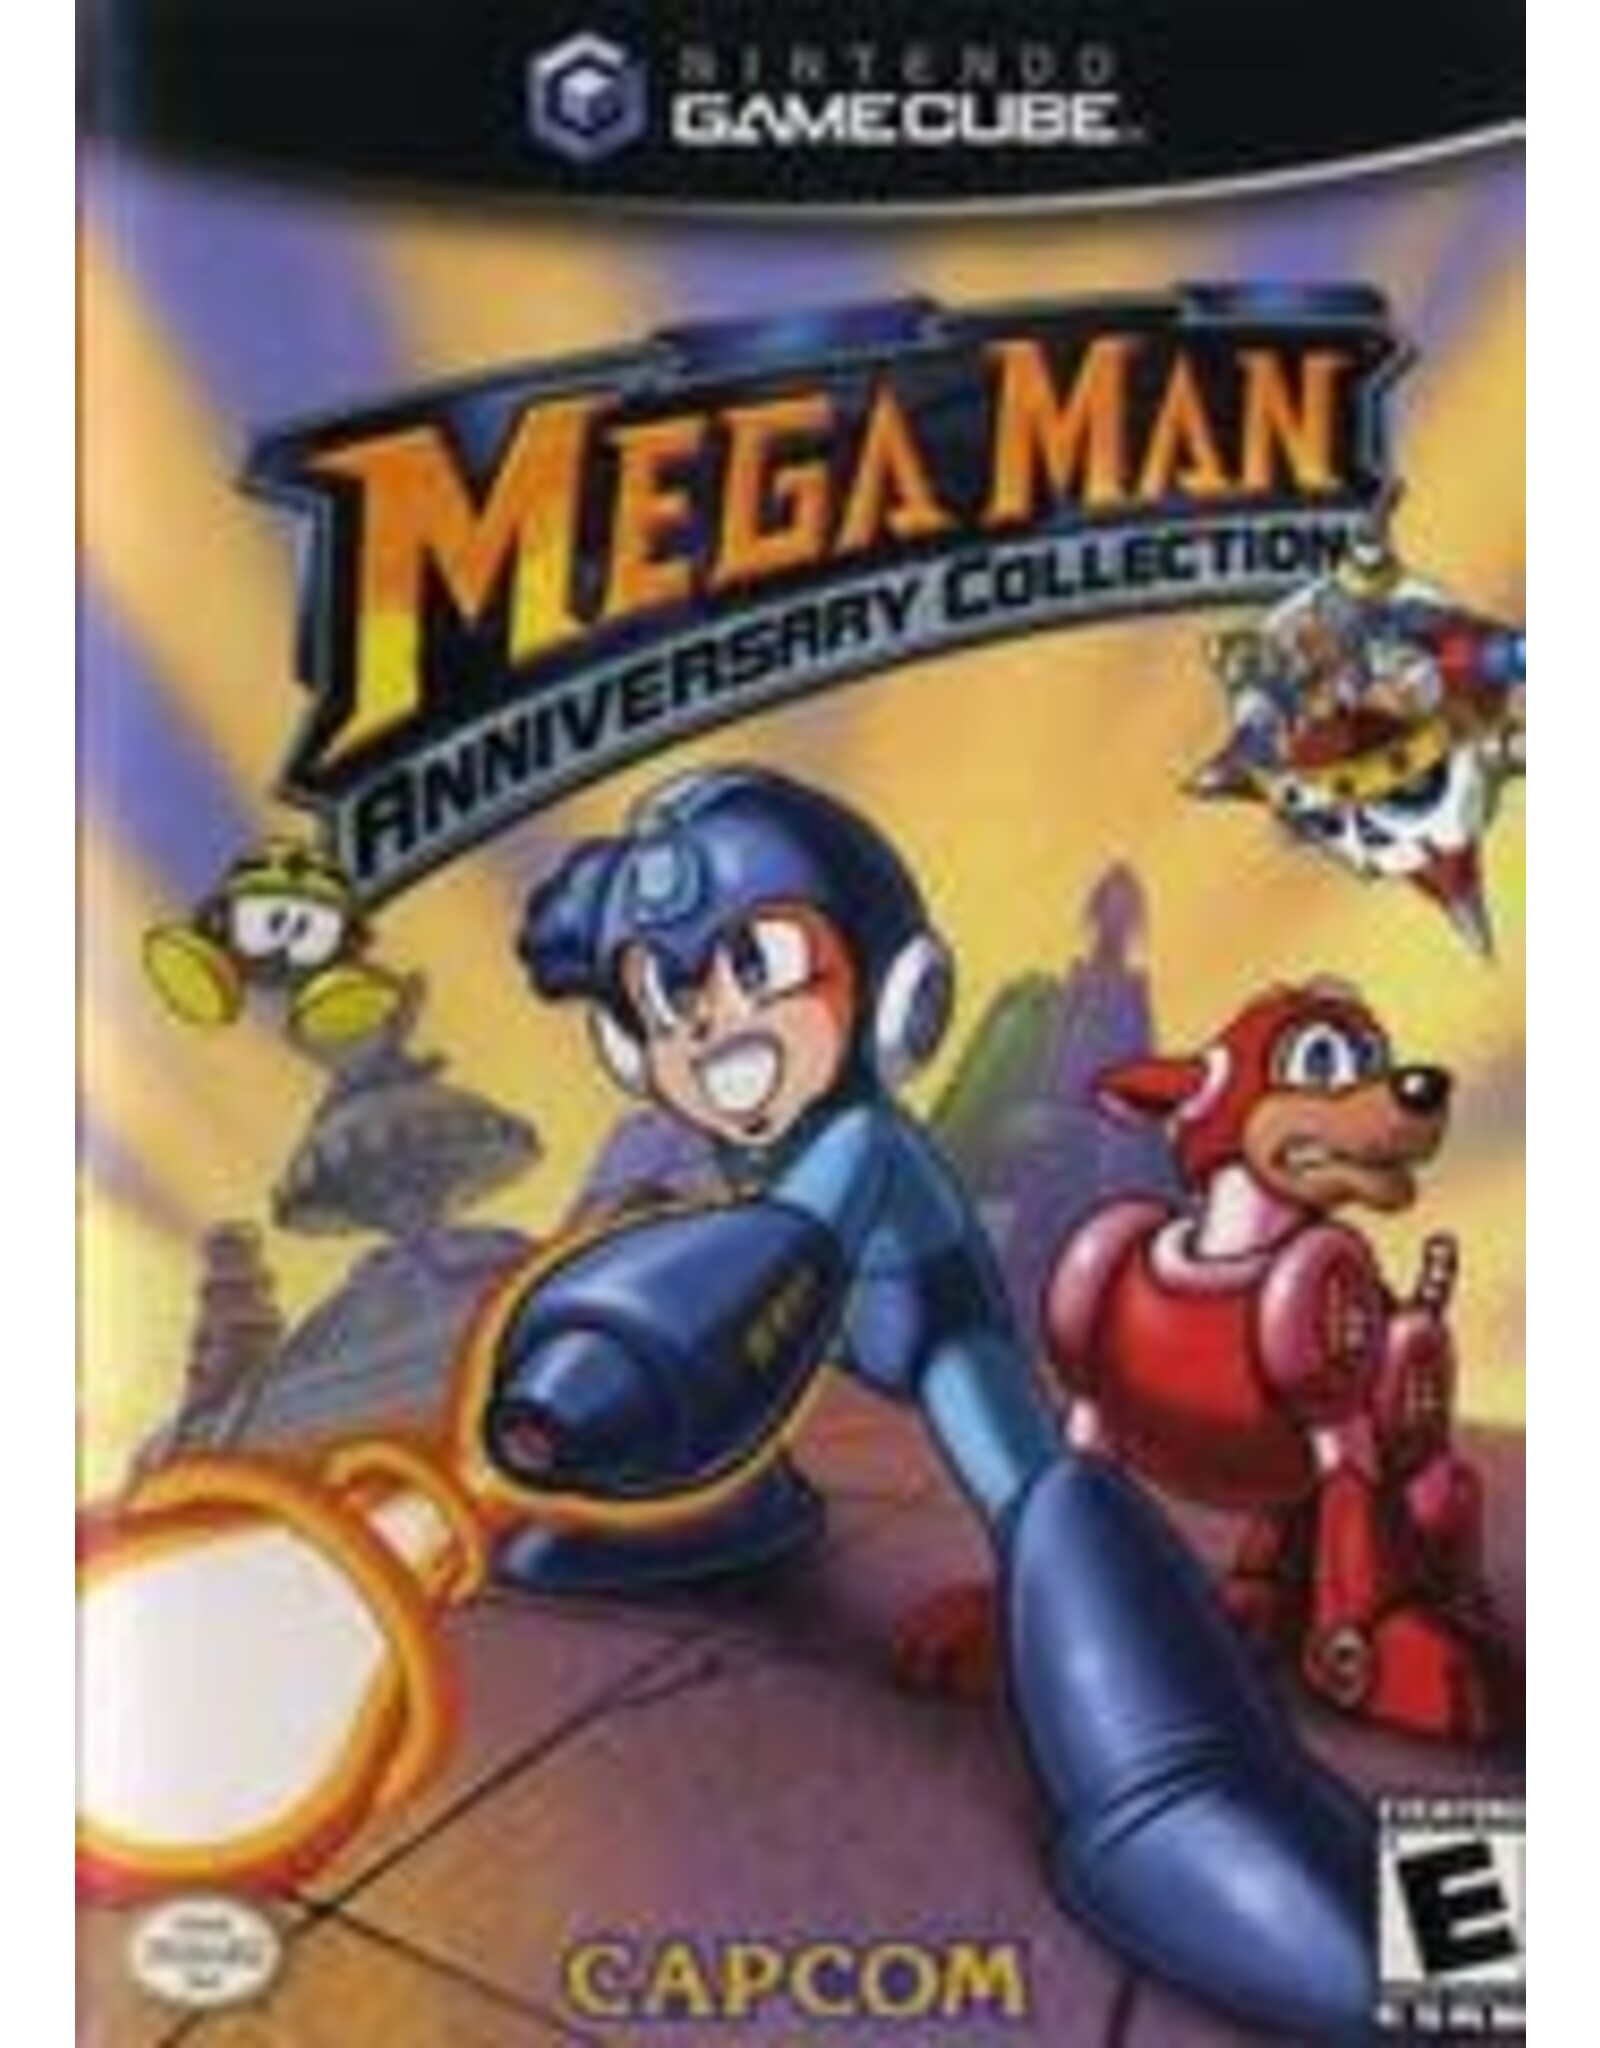 Gamecube Mega Man Anniversary Collection (CiB, Lightly Damaged Manual and Sleeve)